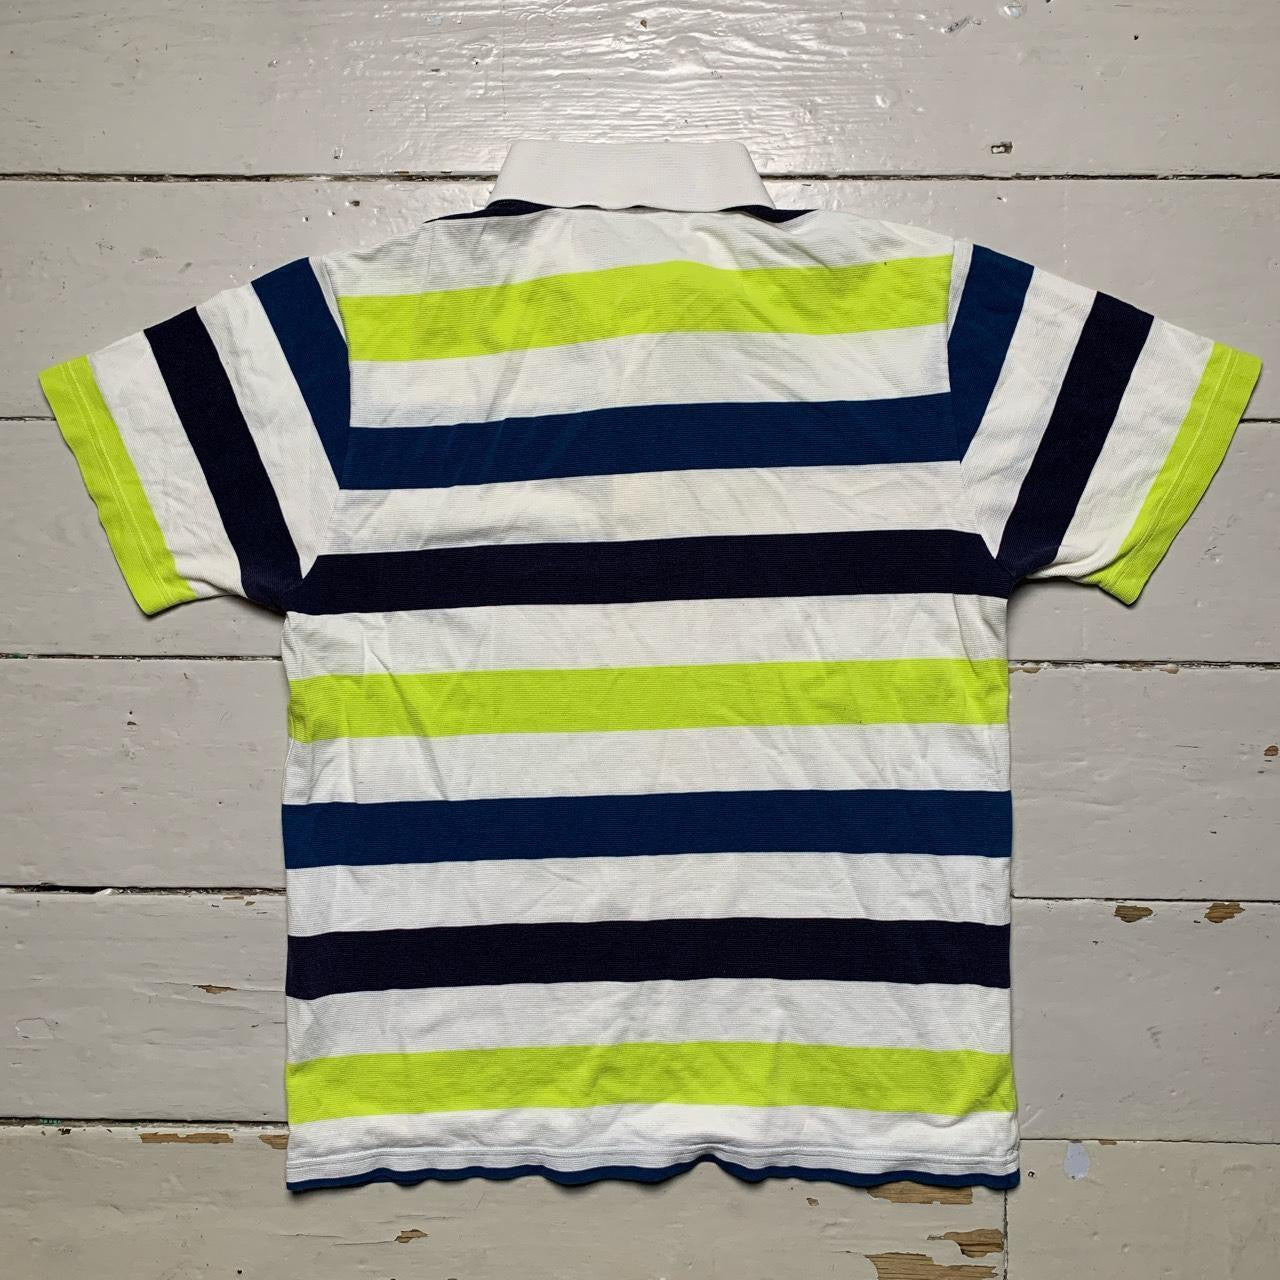 Lacoste Striped Polo Shirt (Medium)